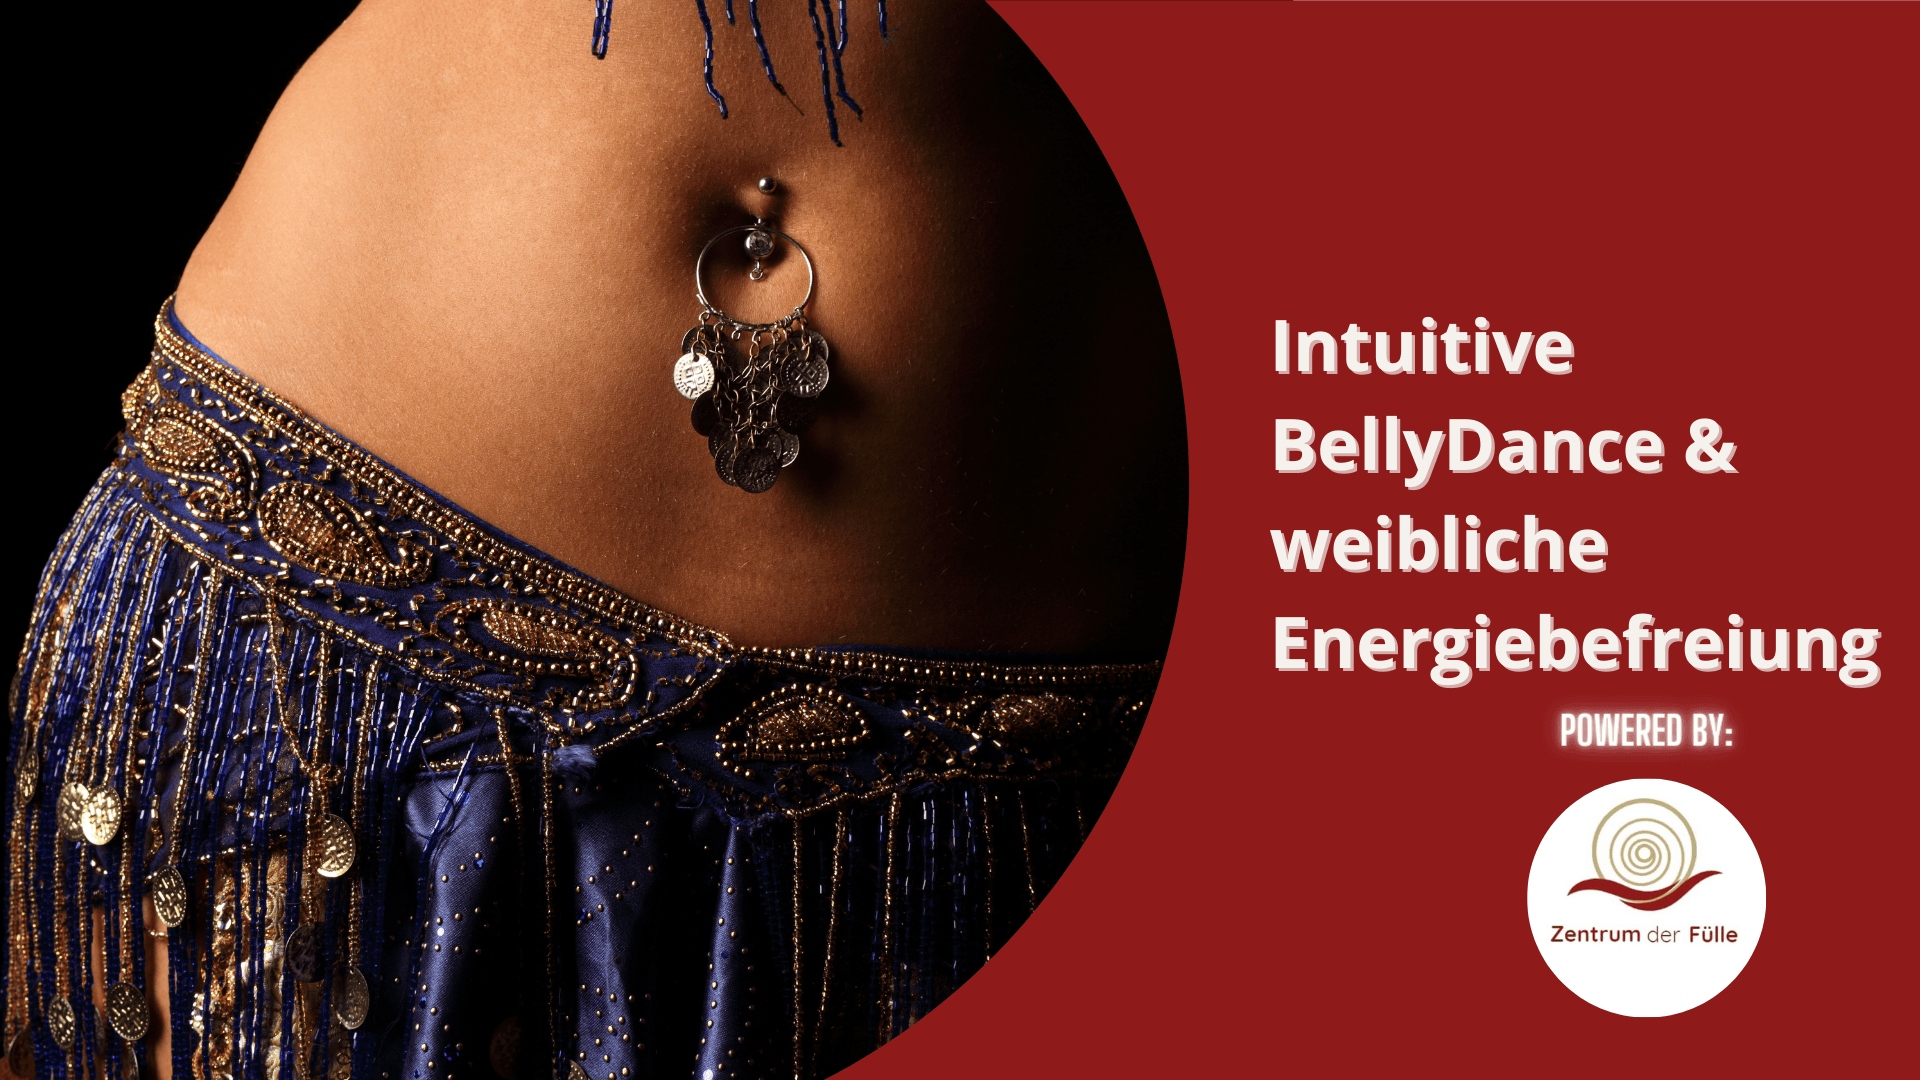 Cover of Event: Intuitive BellyDance & weibliche Energiebefreiung 